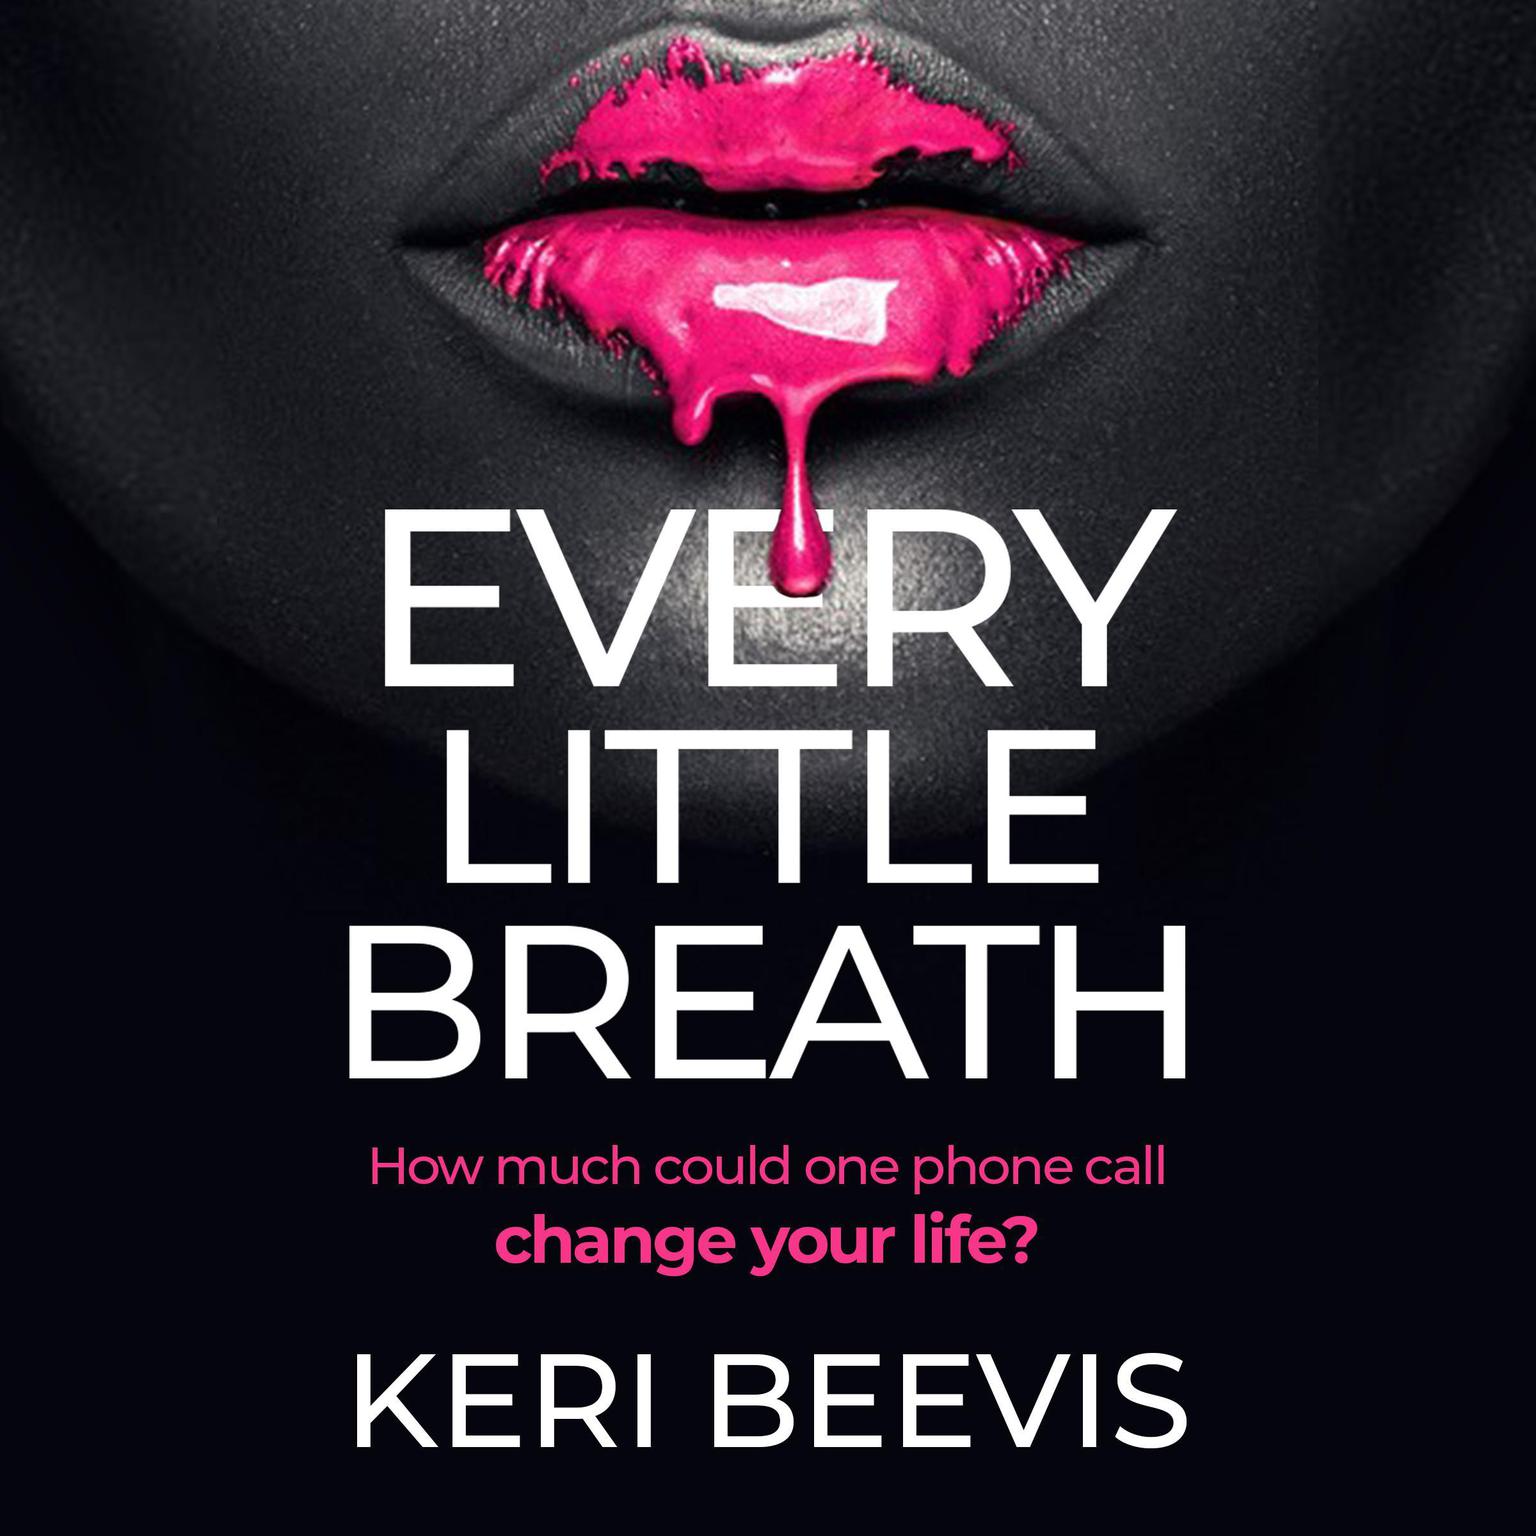 Every Little Breath Audiobook, by Keri Beevis